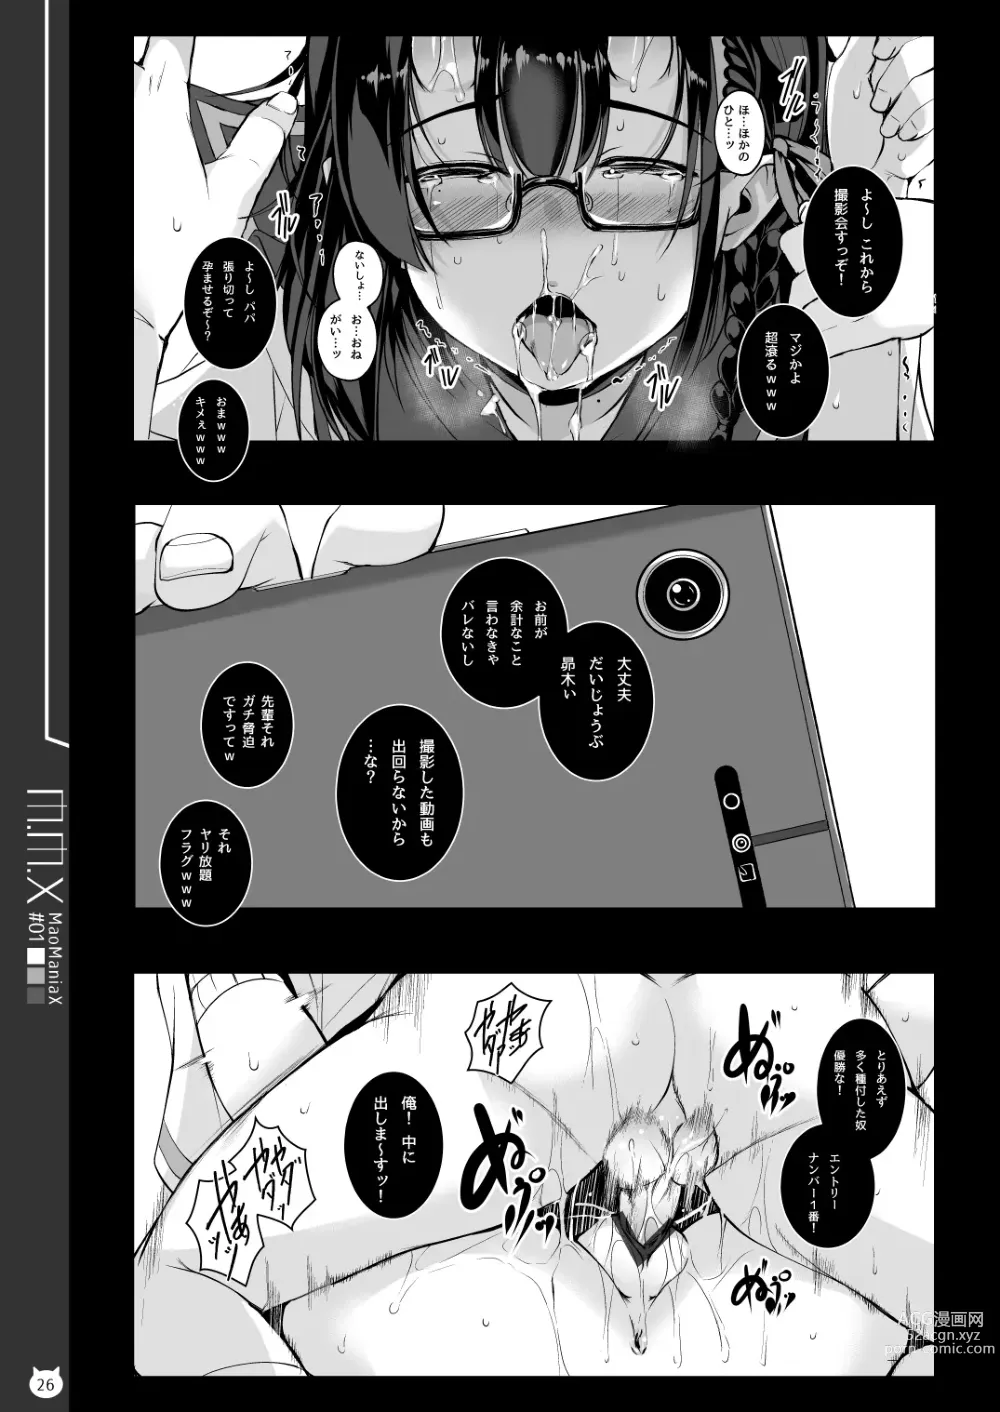 Page 26 of doujinshi M.M.X MaoManiaX #01 -Build2.01-